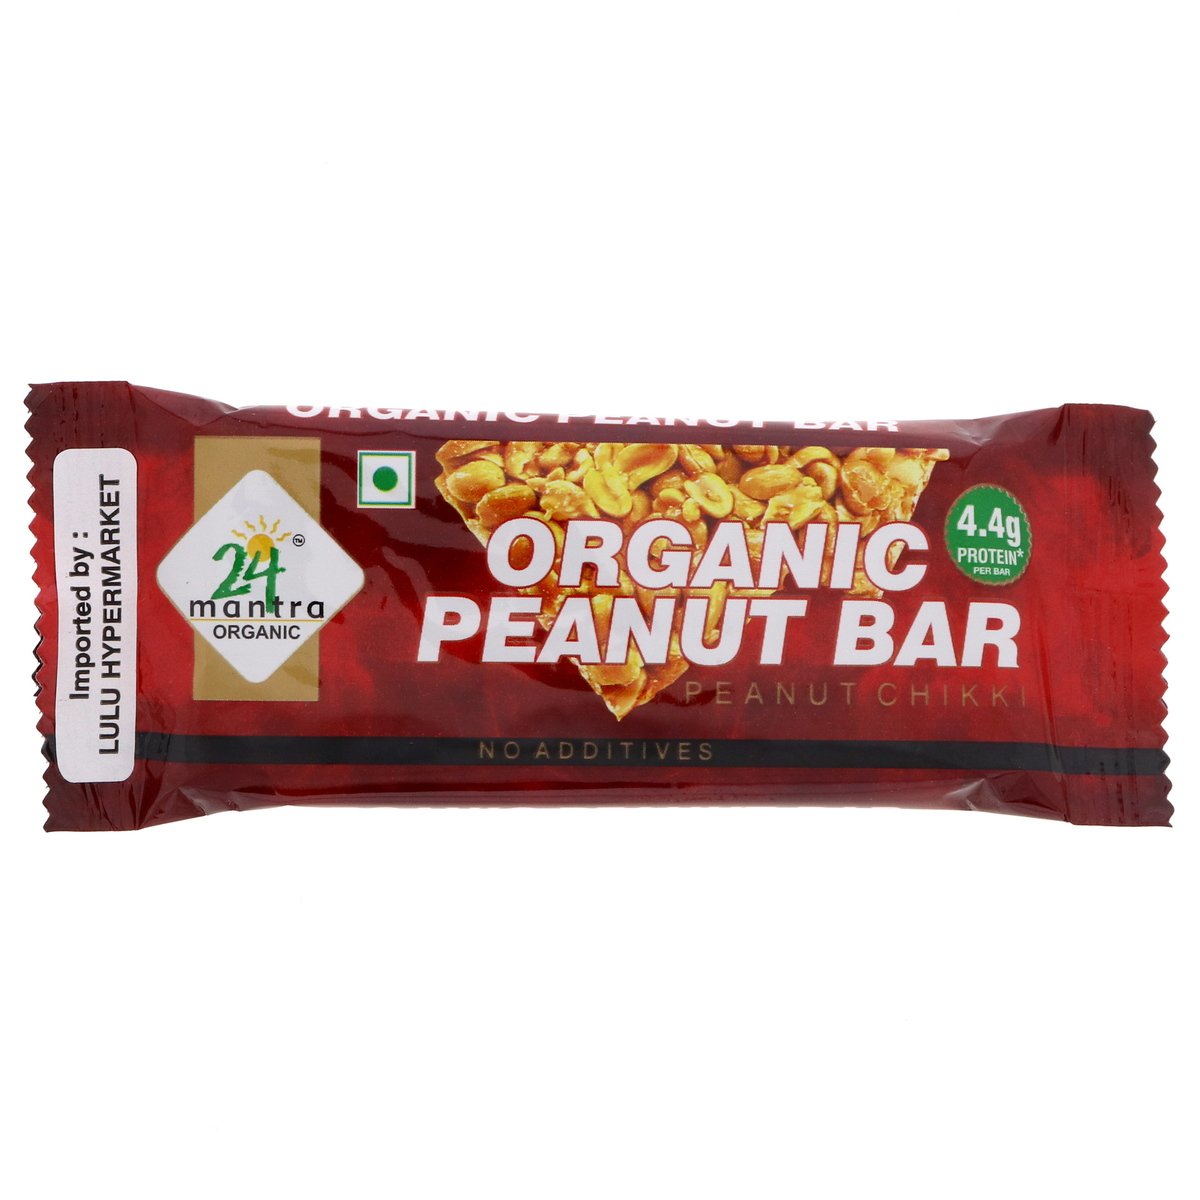 24 Mantra Organic Peanut Bar 33 g